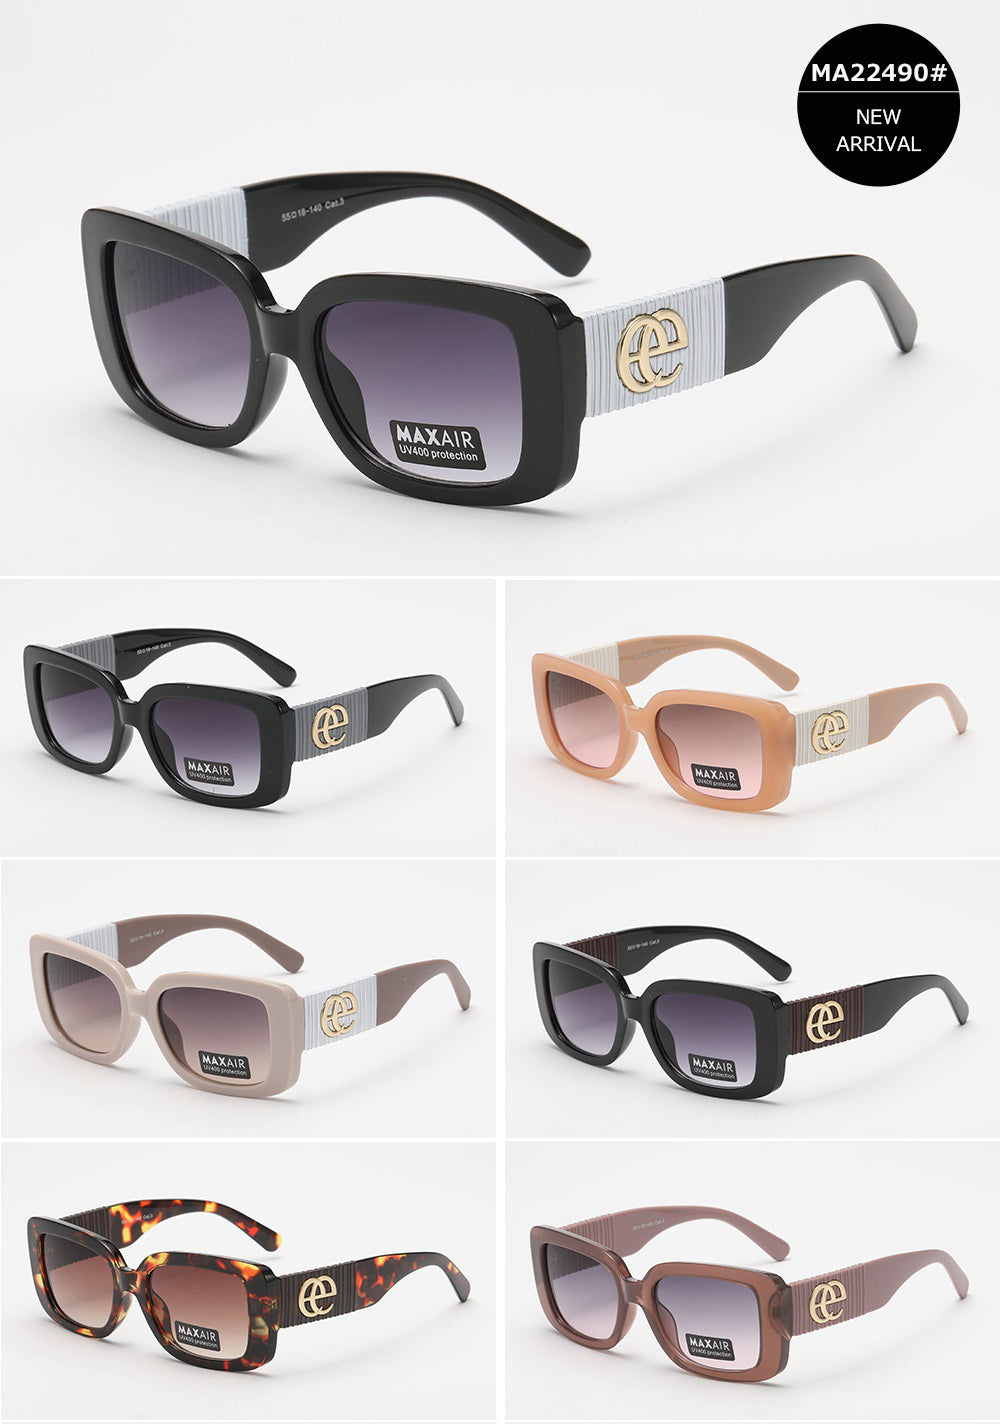 Maxair 22490 Sunglasses